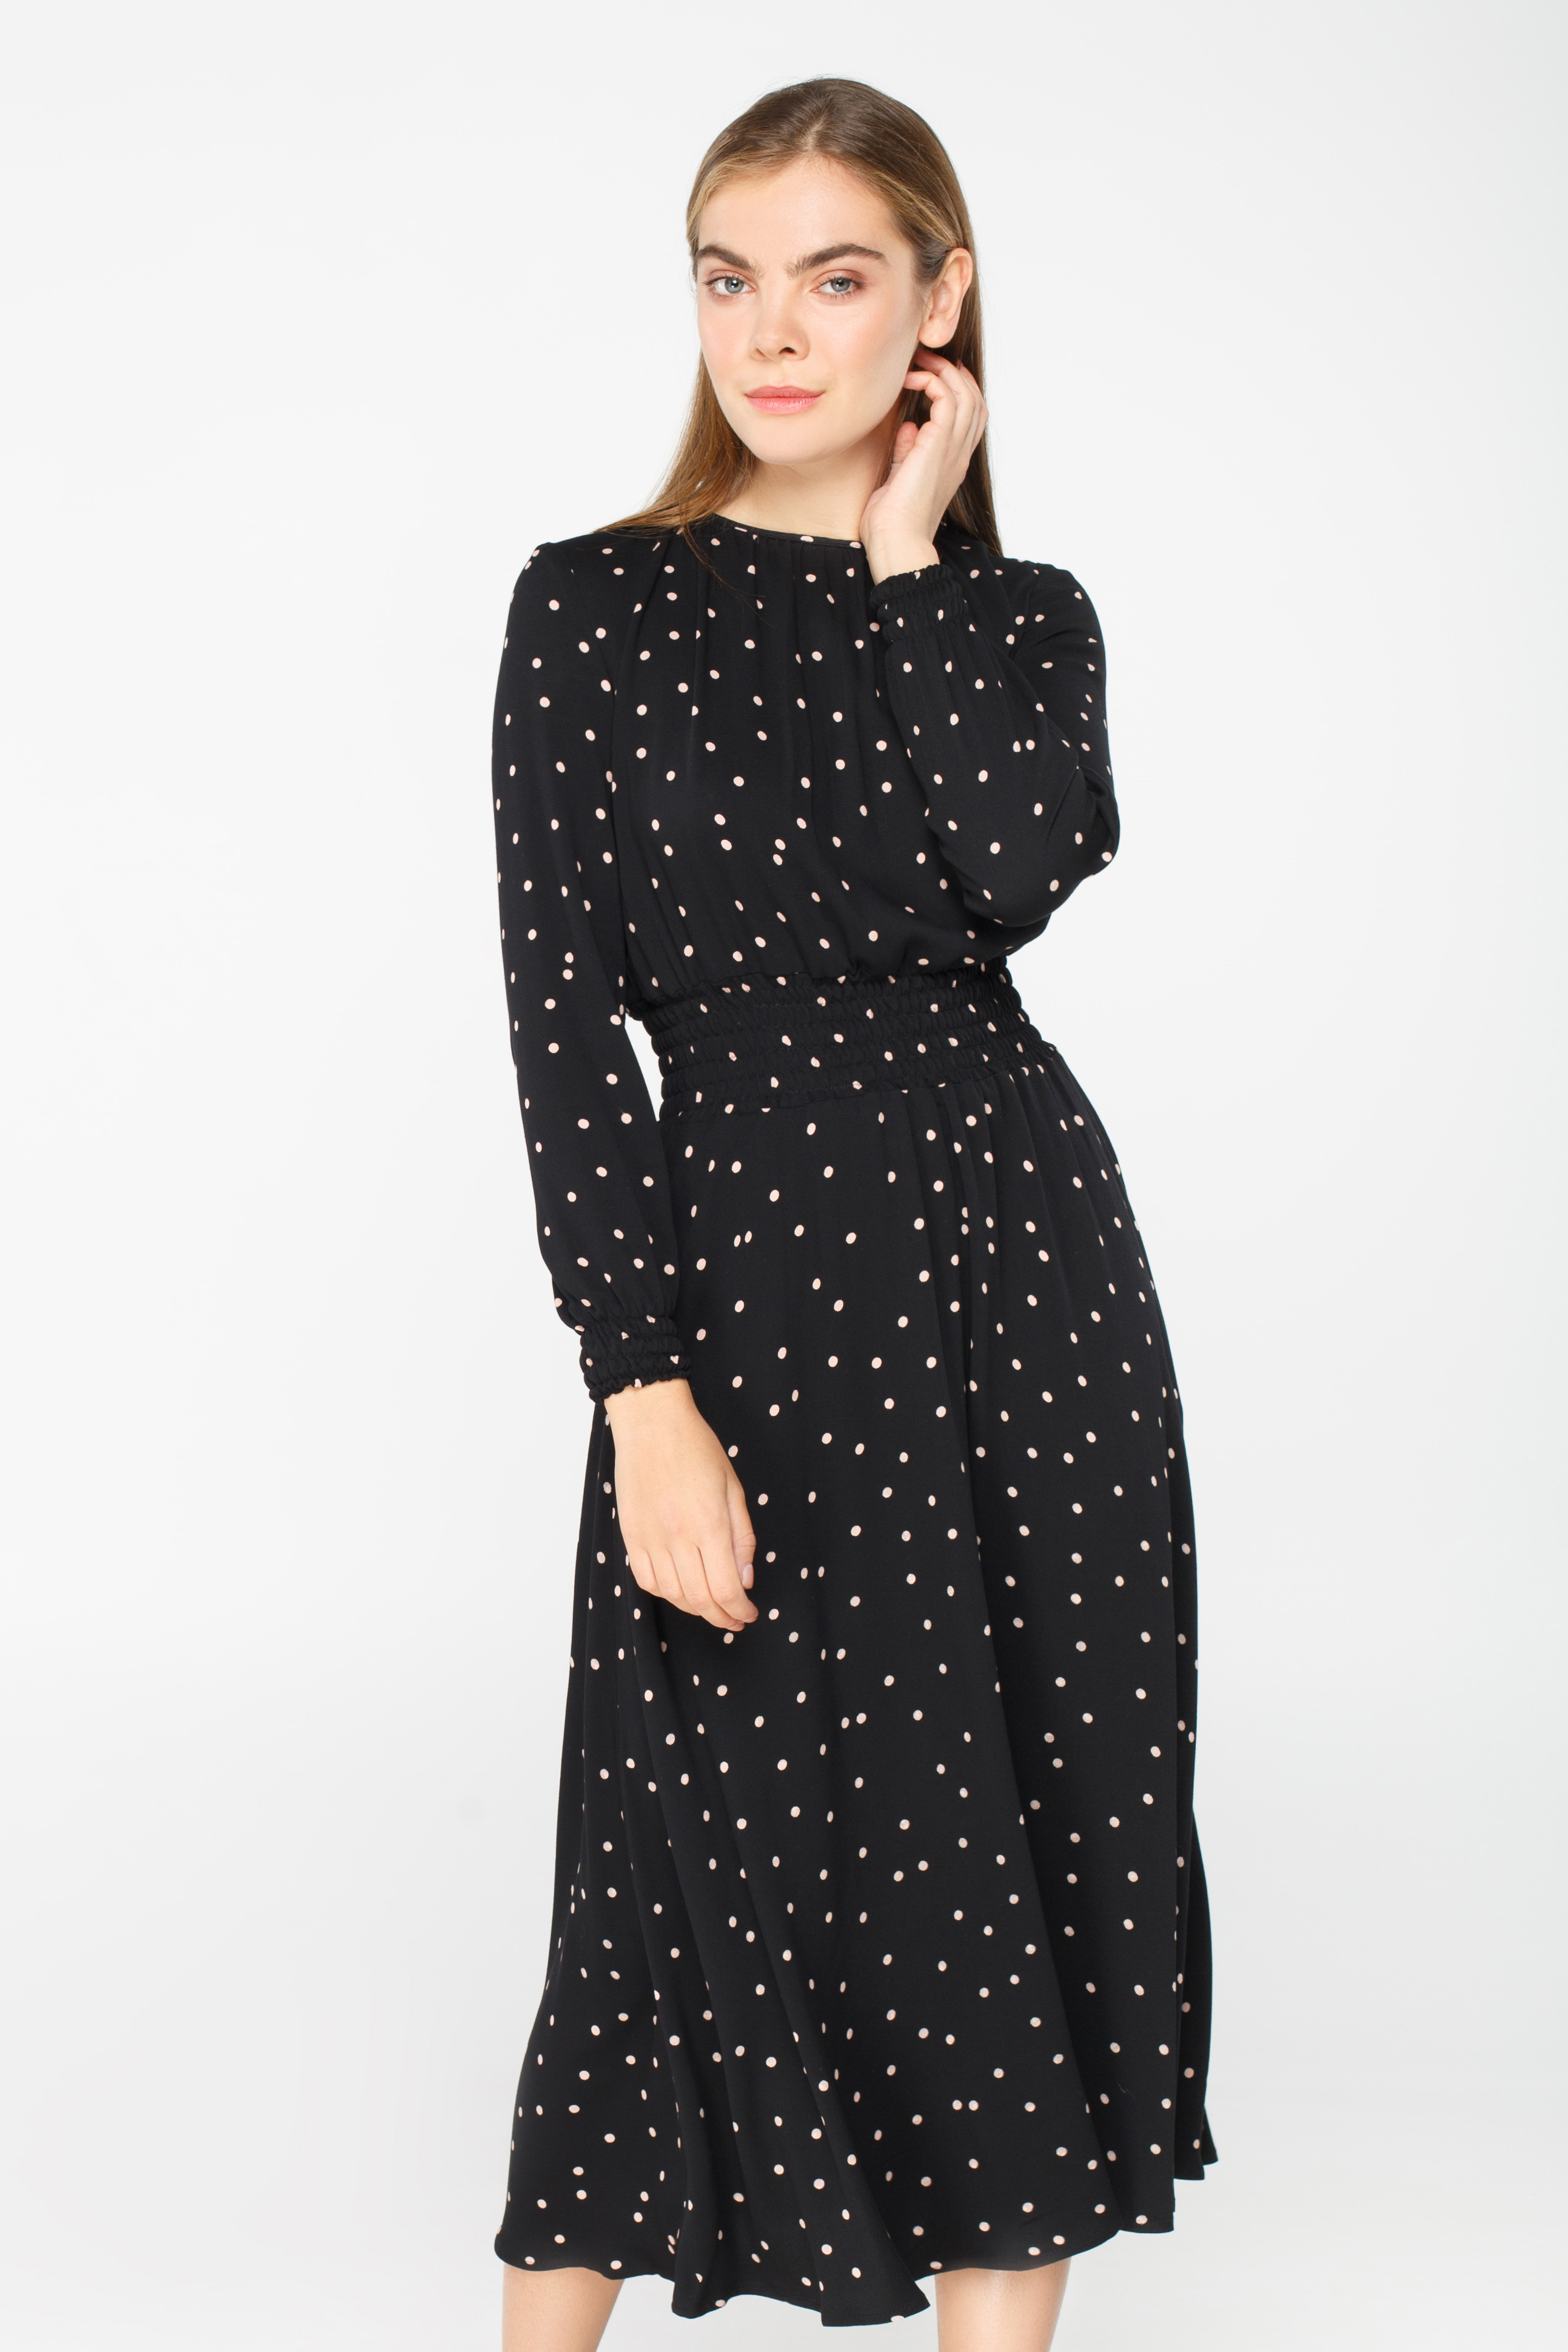 Black polka dot midi dress with elastic waist and cuffs , photo 1